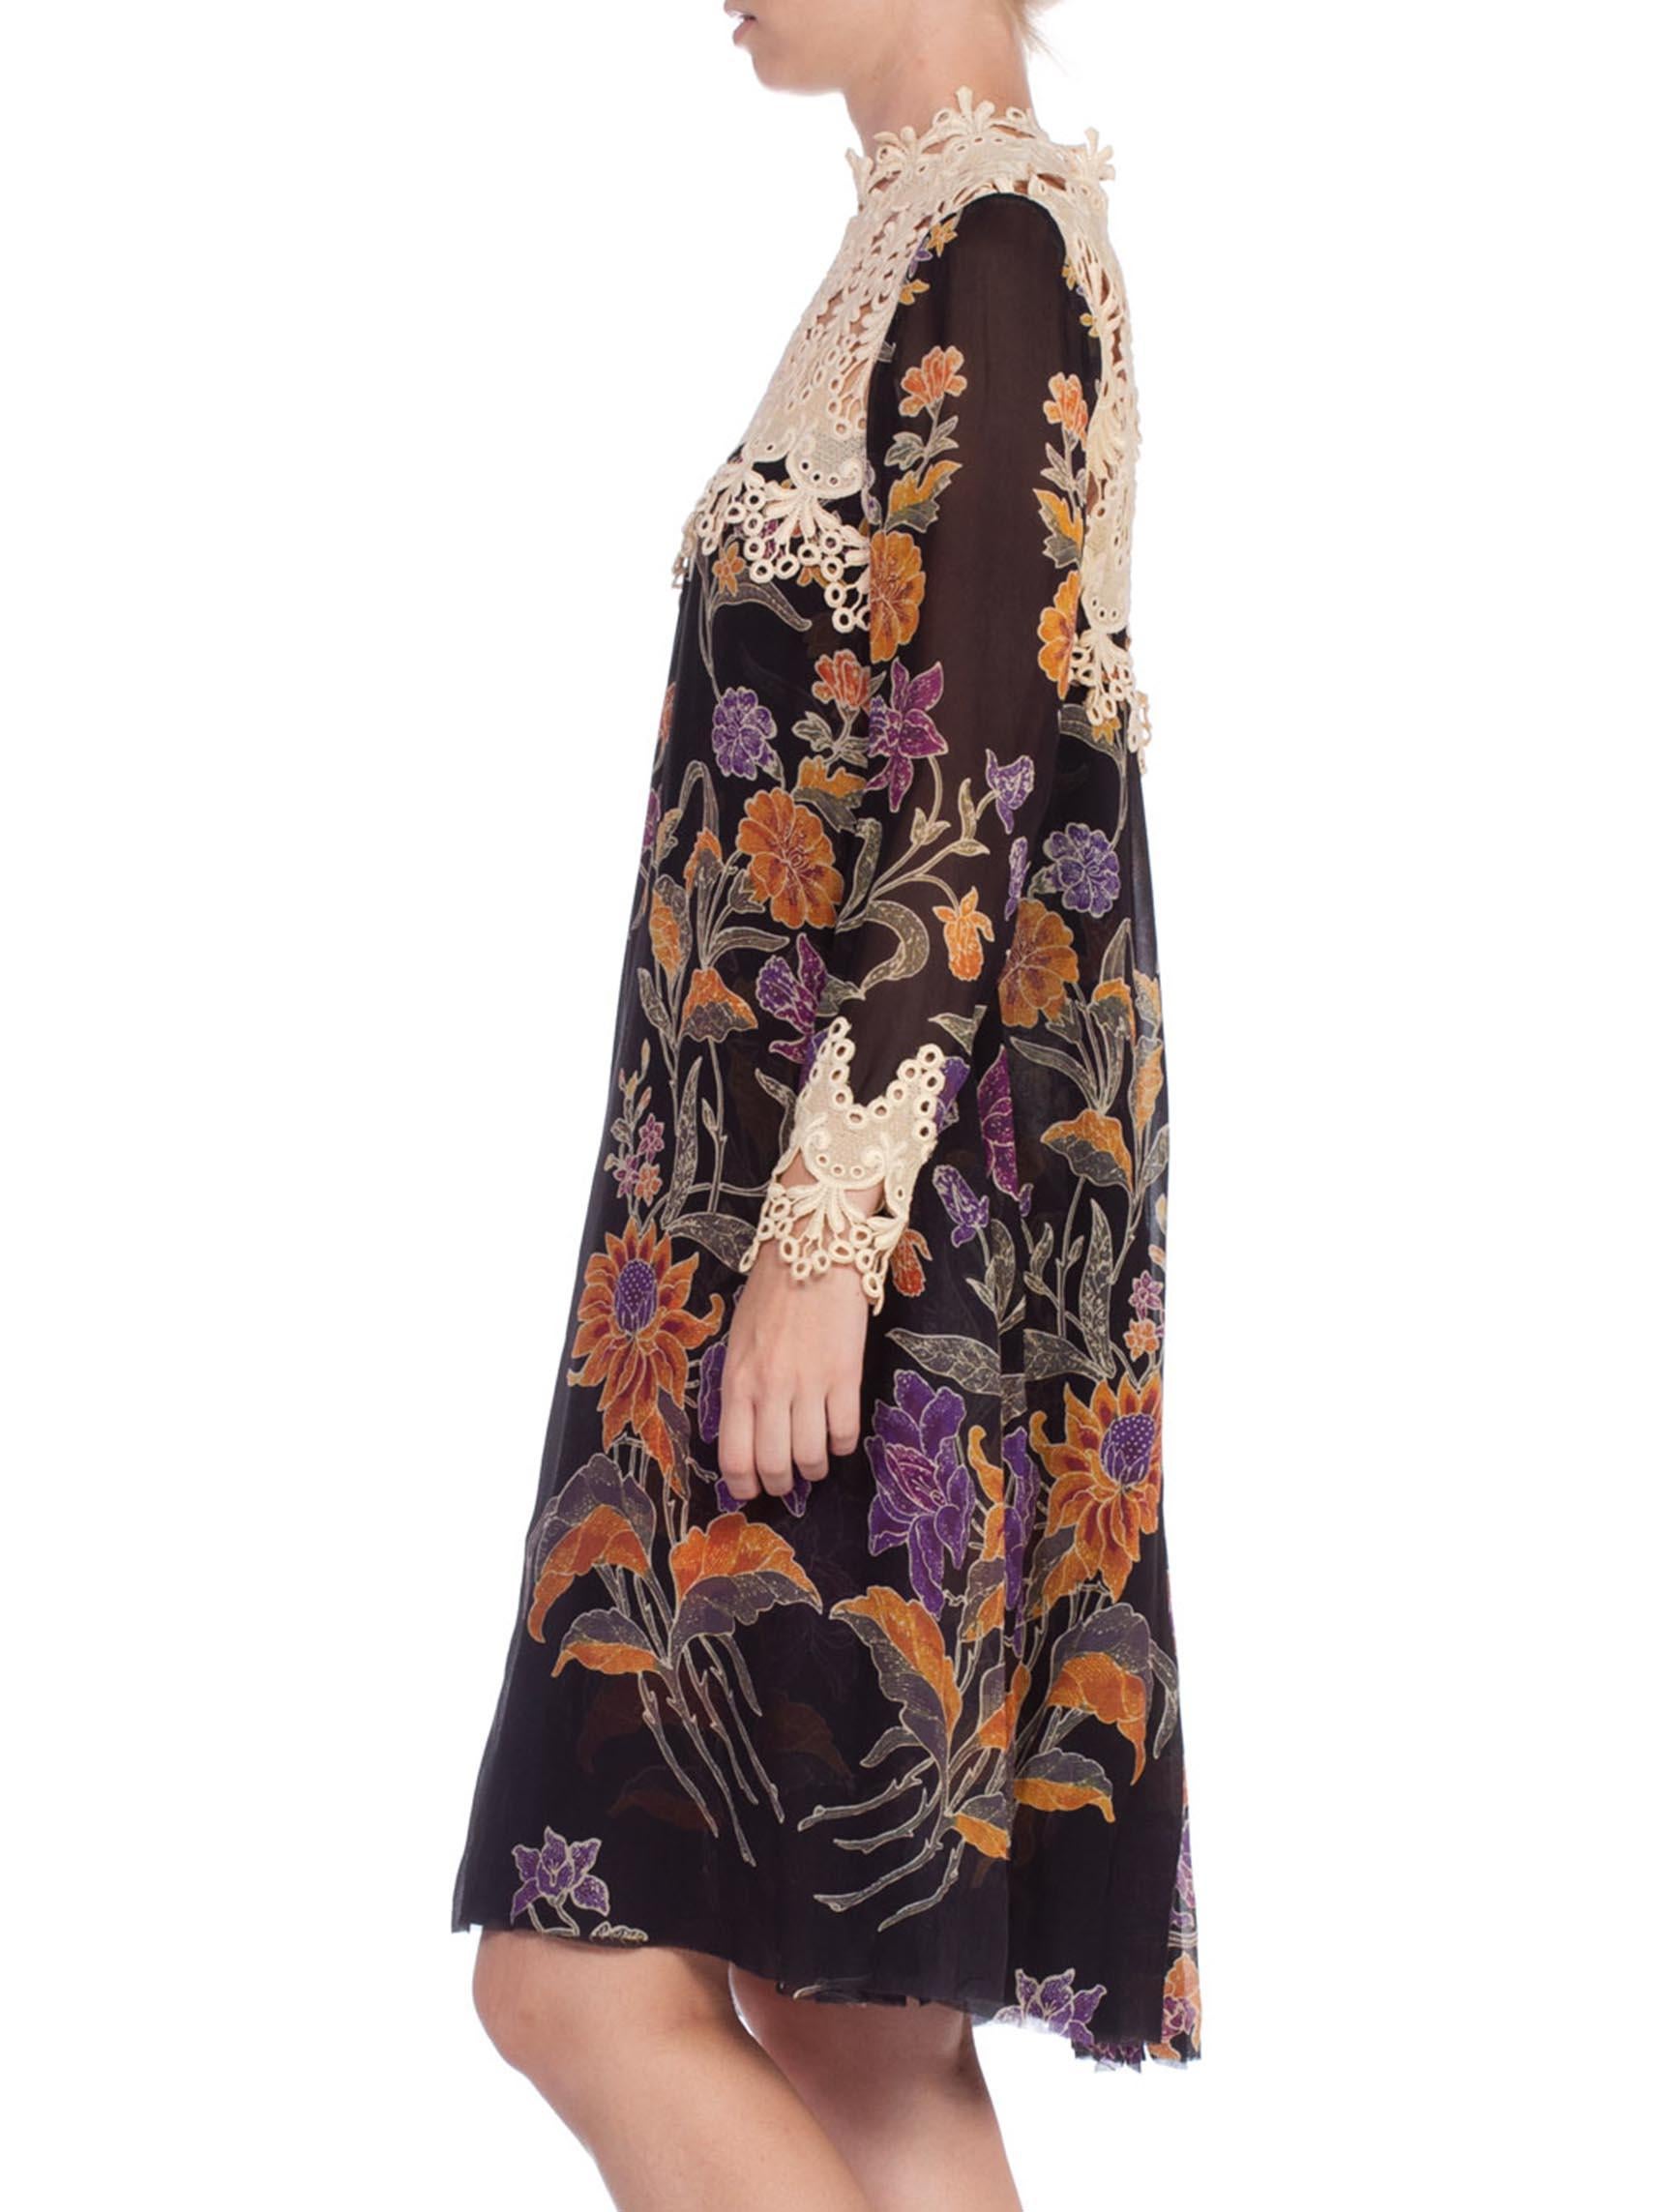 Women's 1960's Floral Sheer Chiffon Boho Dress With Lace